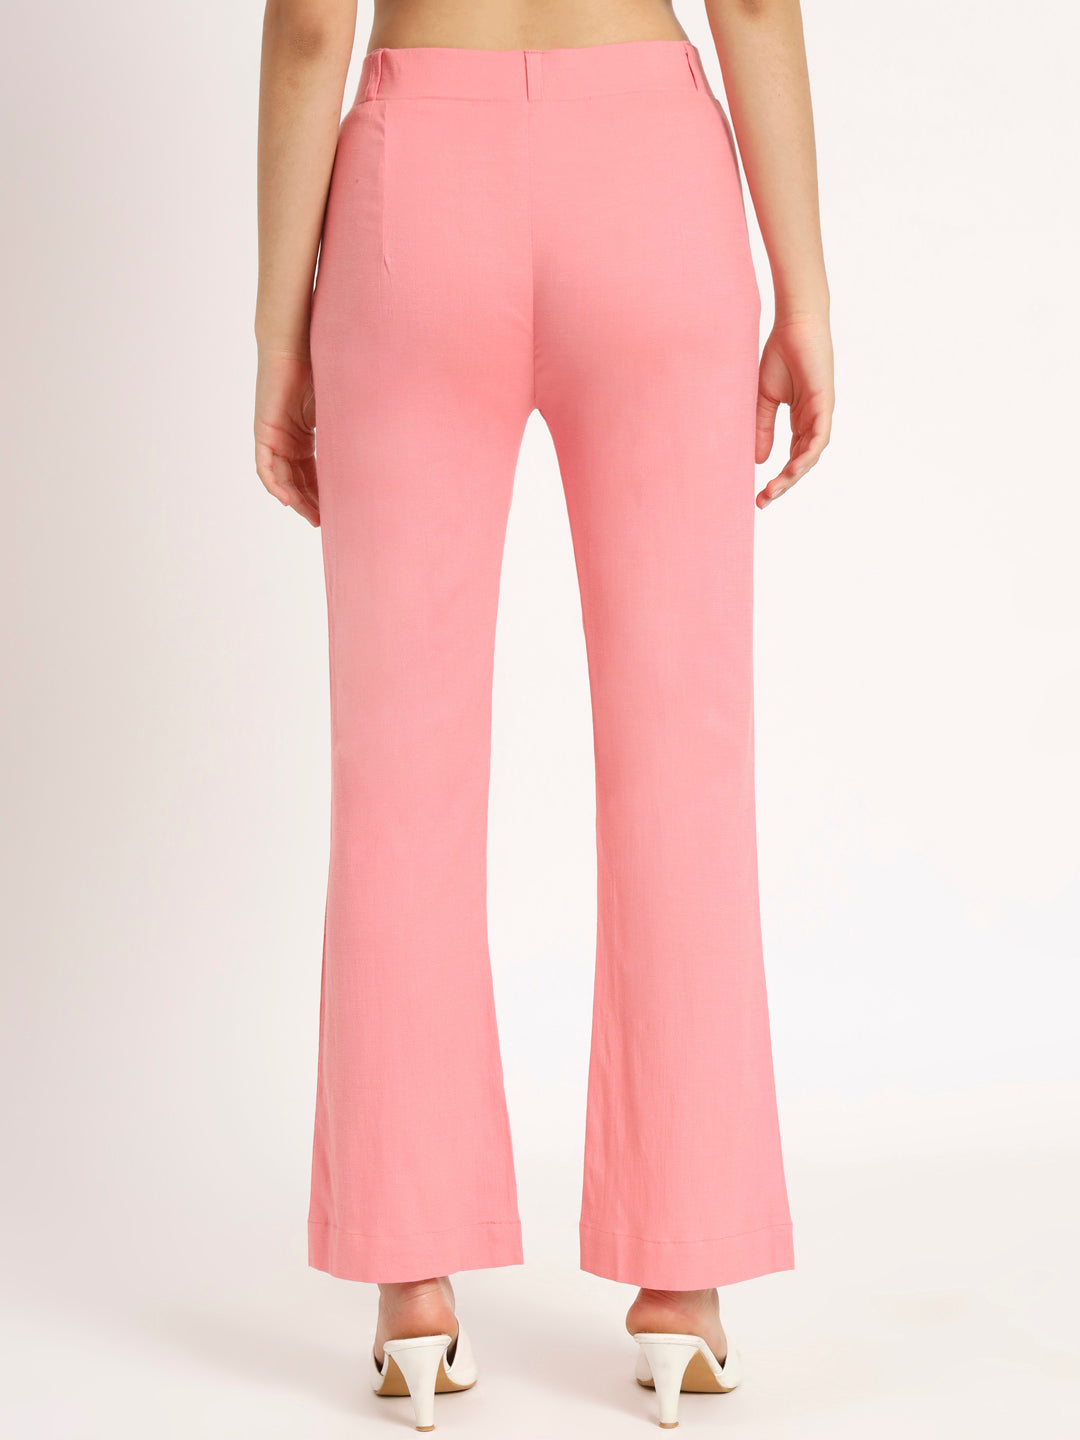 Blush Pink Bell Bottom Pants